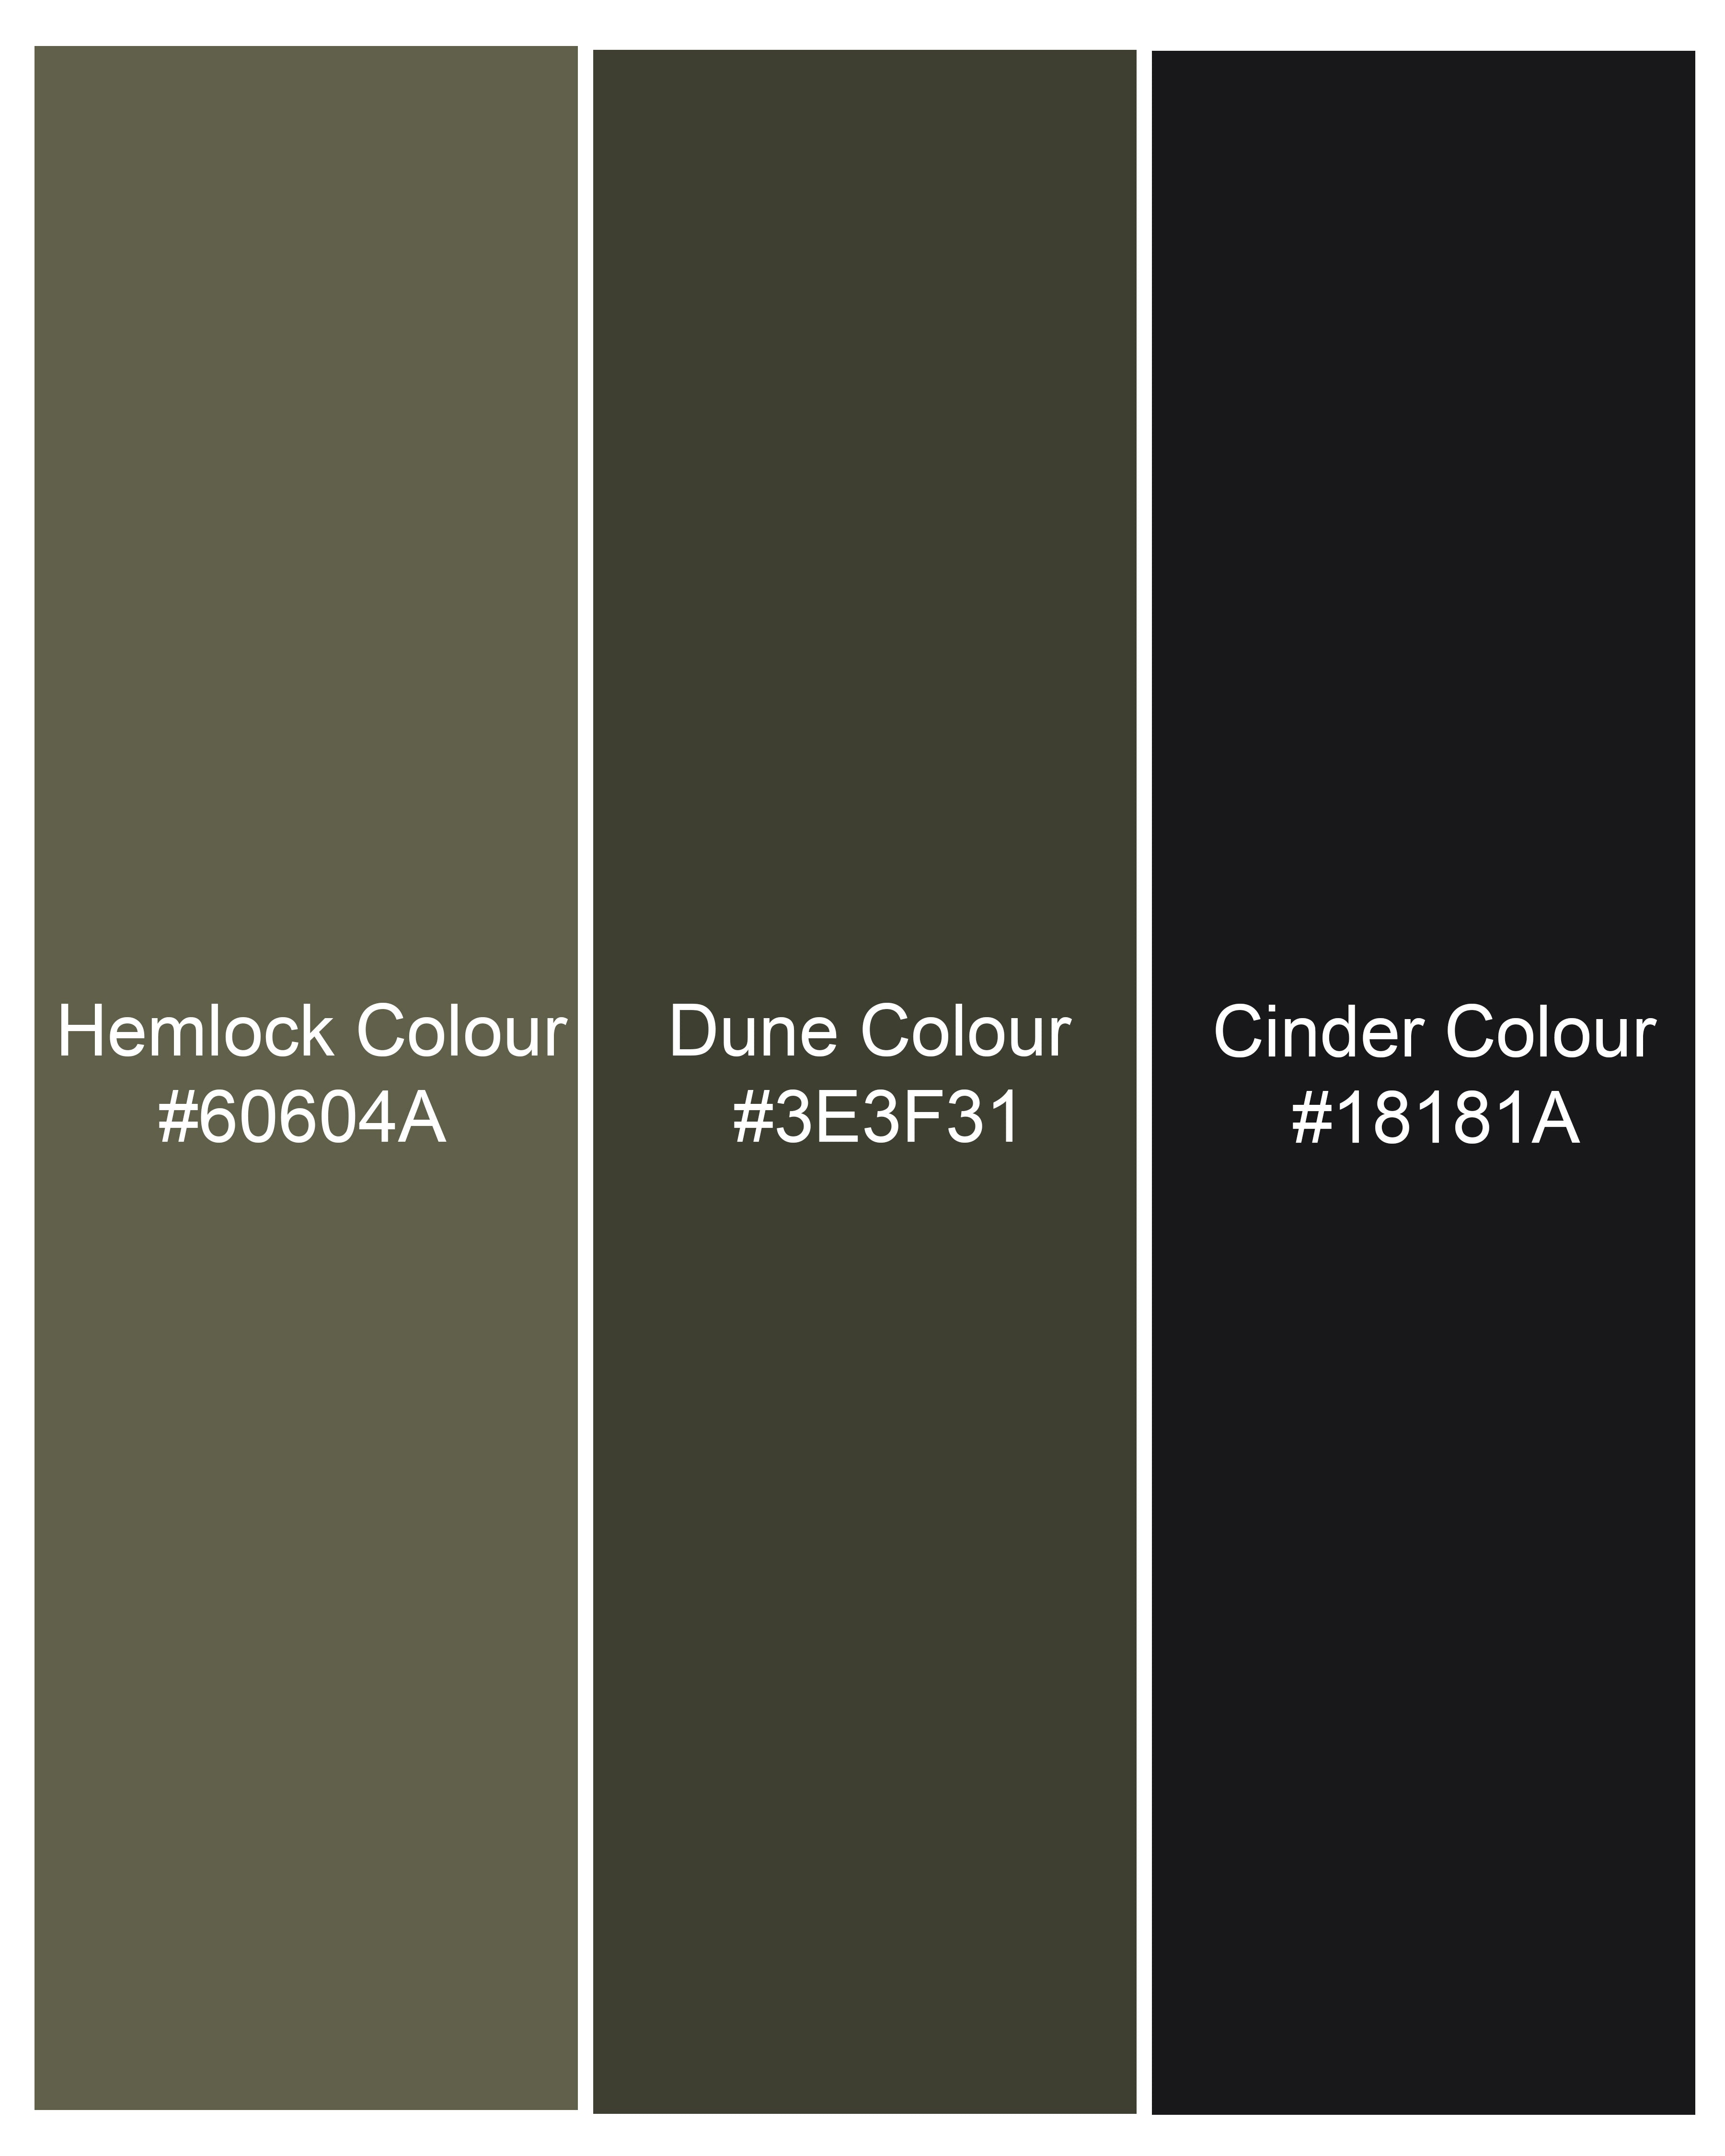 Hemlock Green with Dune Dark Green Camouflage Printed Royal Oxford Shirt 8898-M-MB-P341-38, 8898-M-MB-P341-H-38,  8898-M-MB-P341-39,  8898-M-MB-P341-H-39,  8898-M-MB-P341-40,  8898-M-MB-P341-H-40,  8898-M-MB-P341-42,  8898-M-MB-P341-H-42,  8898-M-MB-P341-44,  8898-M-MB-P341-H-44,  8898-M-MB-P341-46,  8898-M-MB-P341-H-46,  8898-M-MB-P341-48,  8898-M-MB-P341-H-48,  8898-M-MB-P341-50,  8898-M-MB-P341-H-50,  8898-M-MB-P341-52,  8898-M-MB-P341-H-52